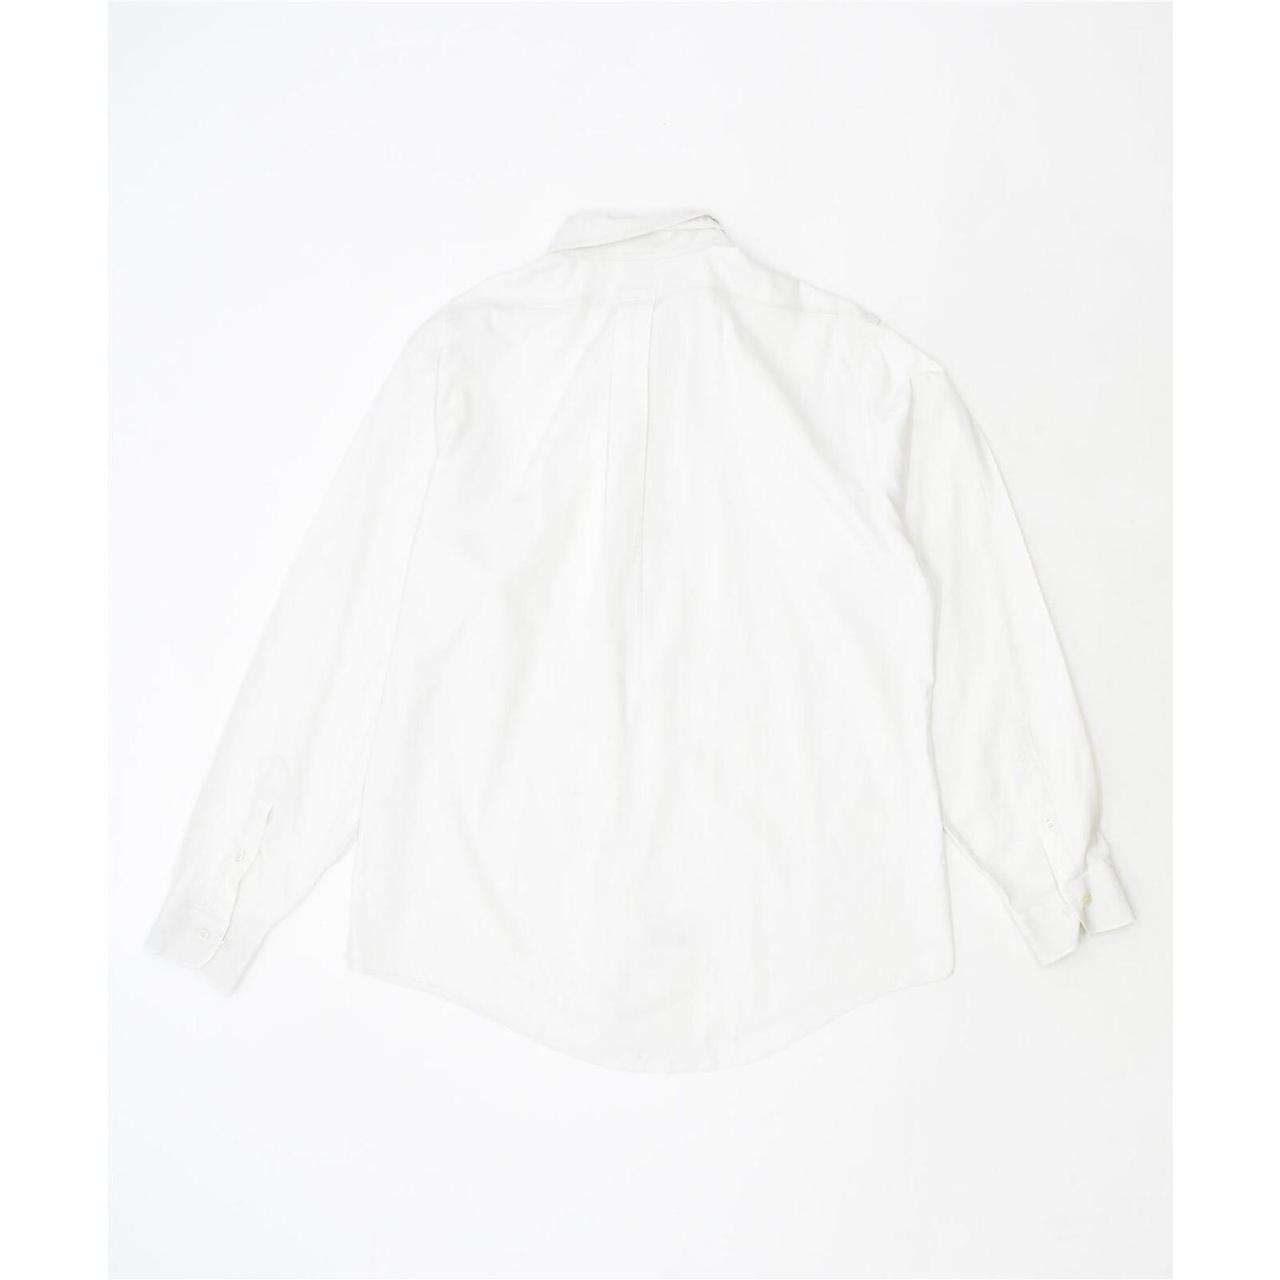 Product Image 2 - BROOKSFIELD Mens Shirt Large White